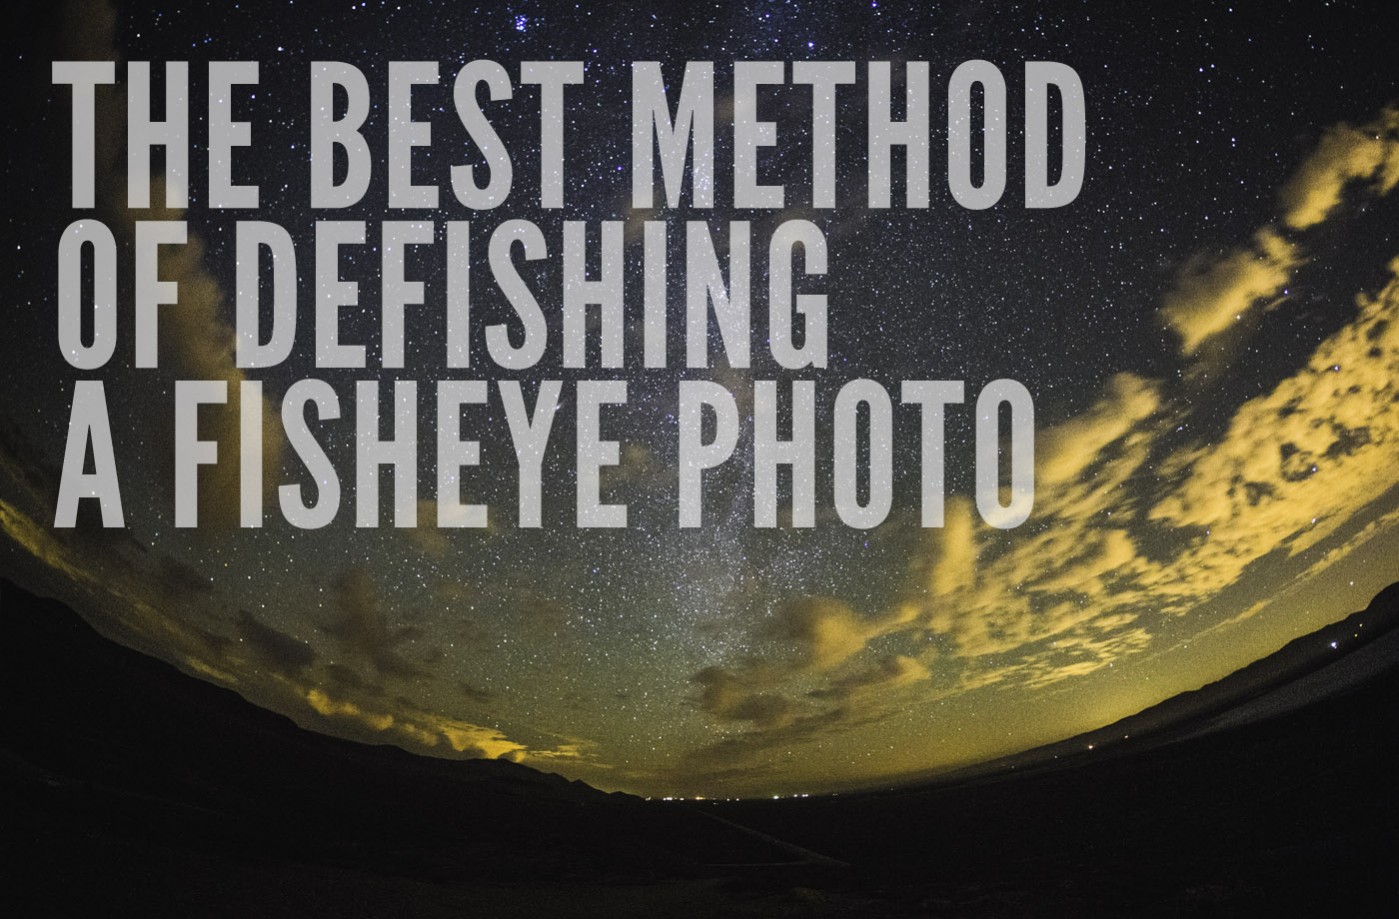 the best method of defishing a fisheye photo